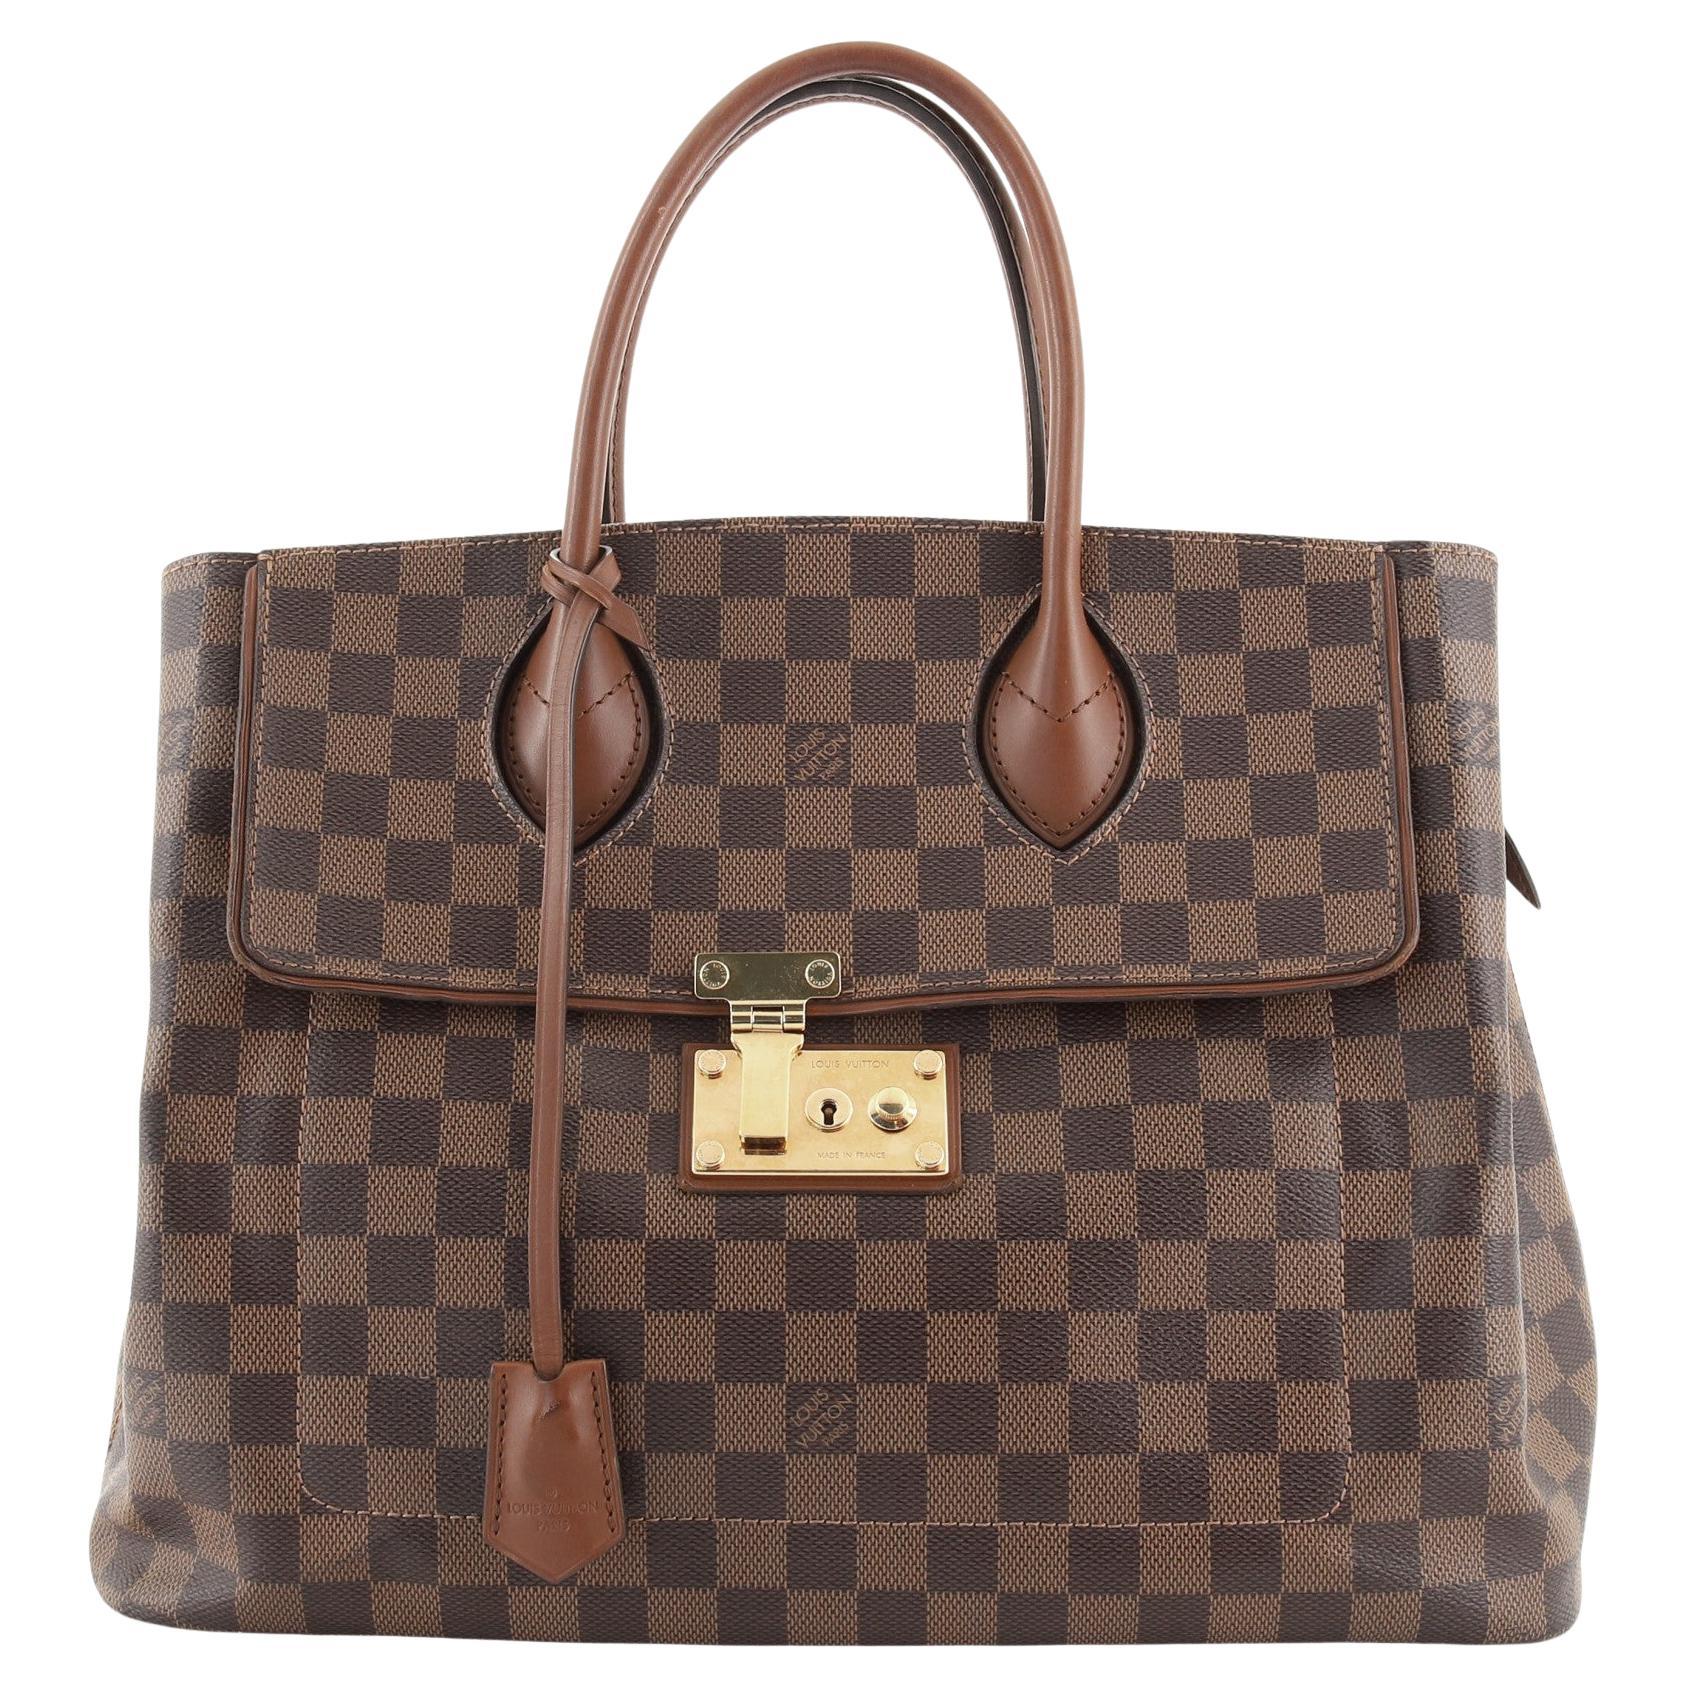 Louis Vuitton Ascot Handbag Damier